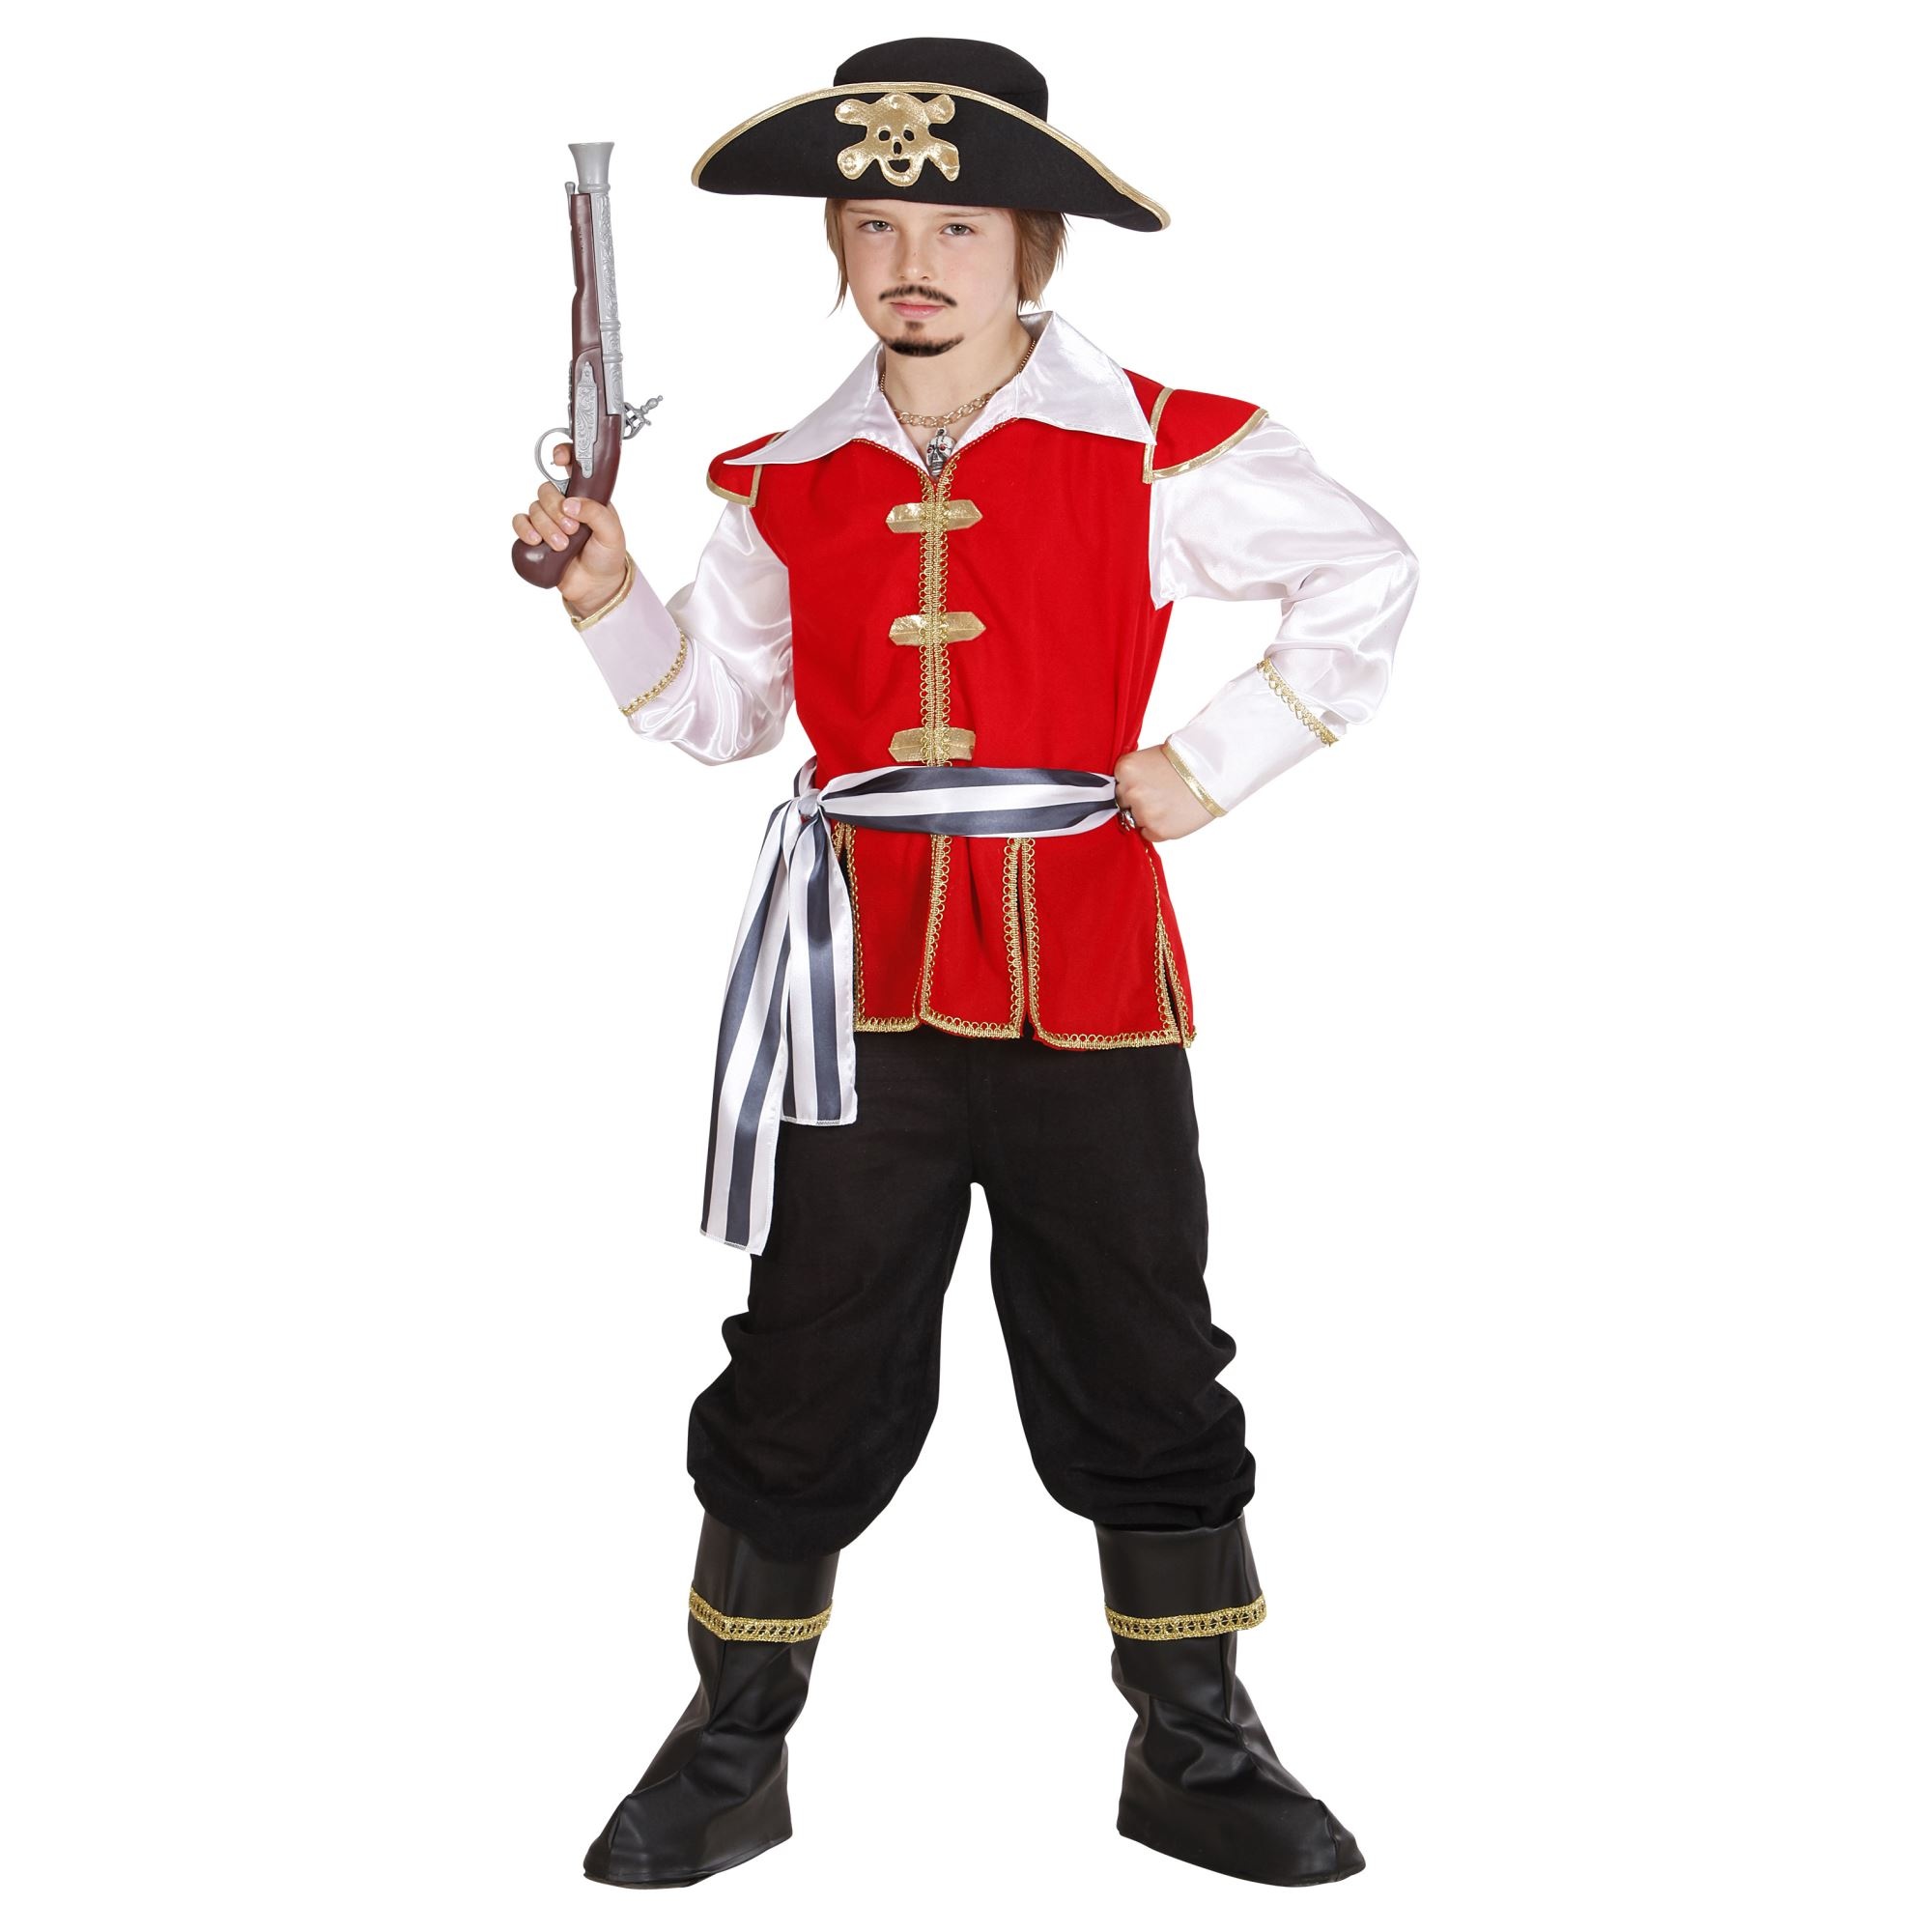 Widmann - Piraat & Viking Kostuum - Officieel Piratenkapitein - Jongen - rood,zwart - Maat 128 - Carnavalskleding - Verkleedkleding